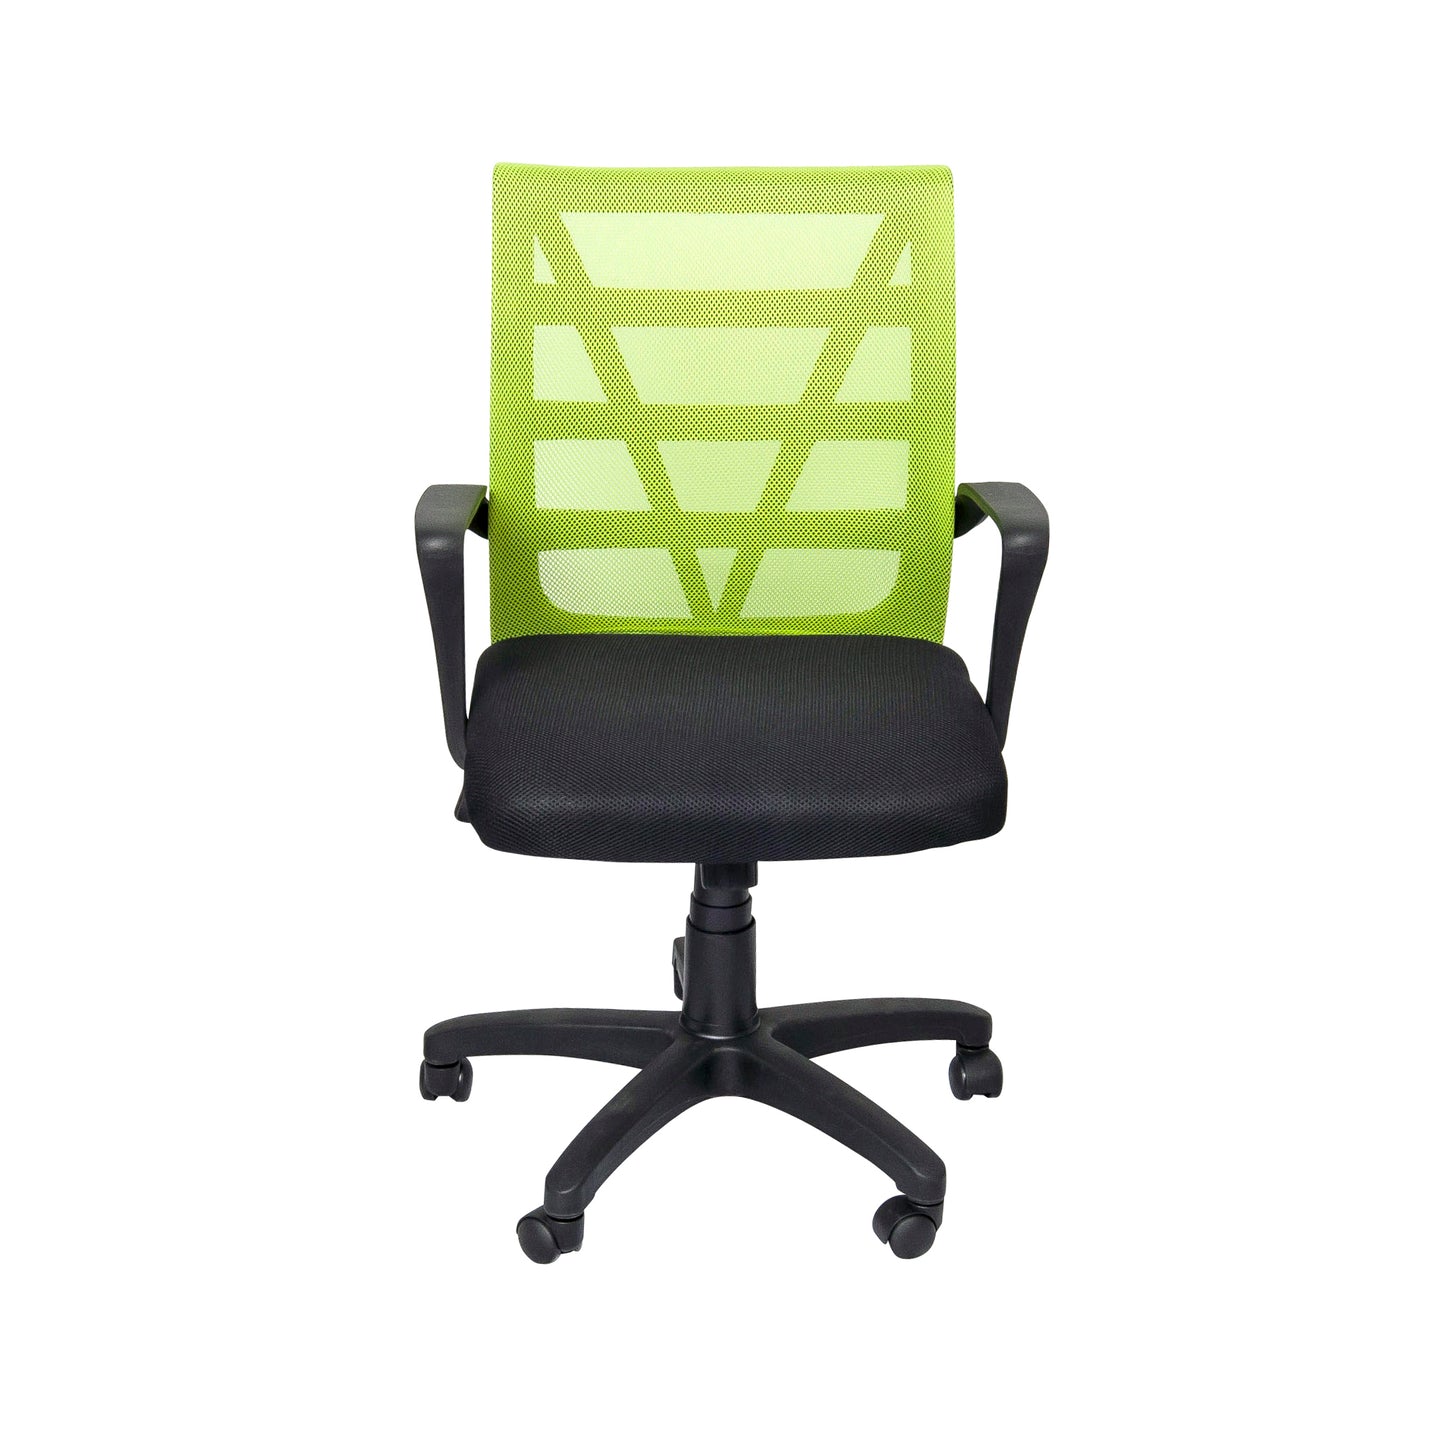 ErgoHome CL Office Chair - Lime